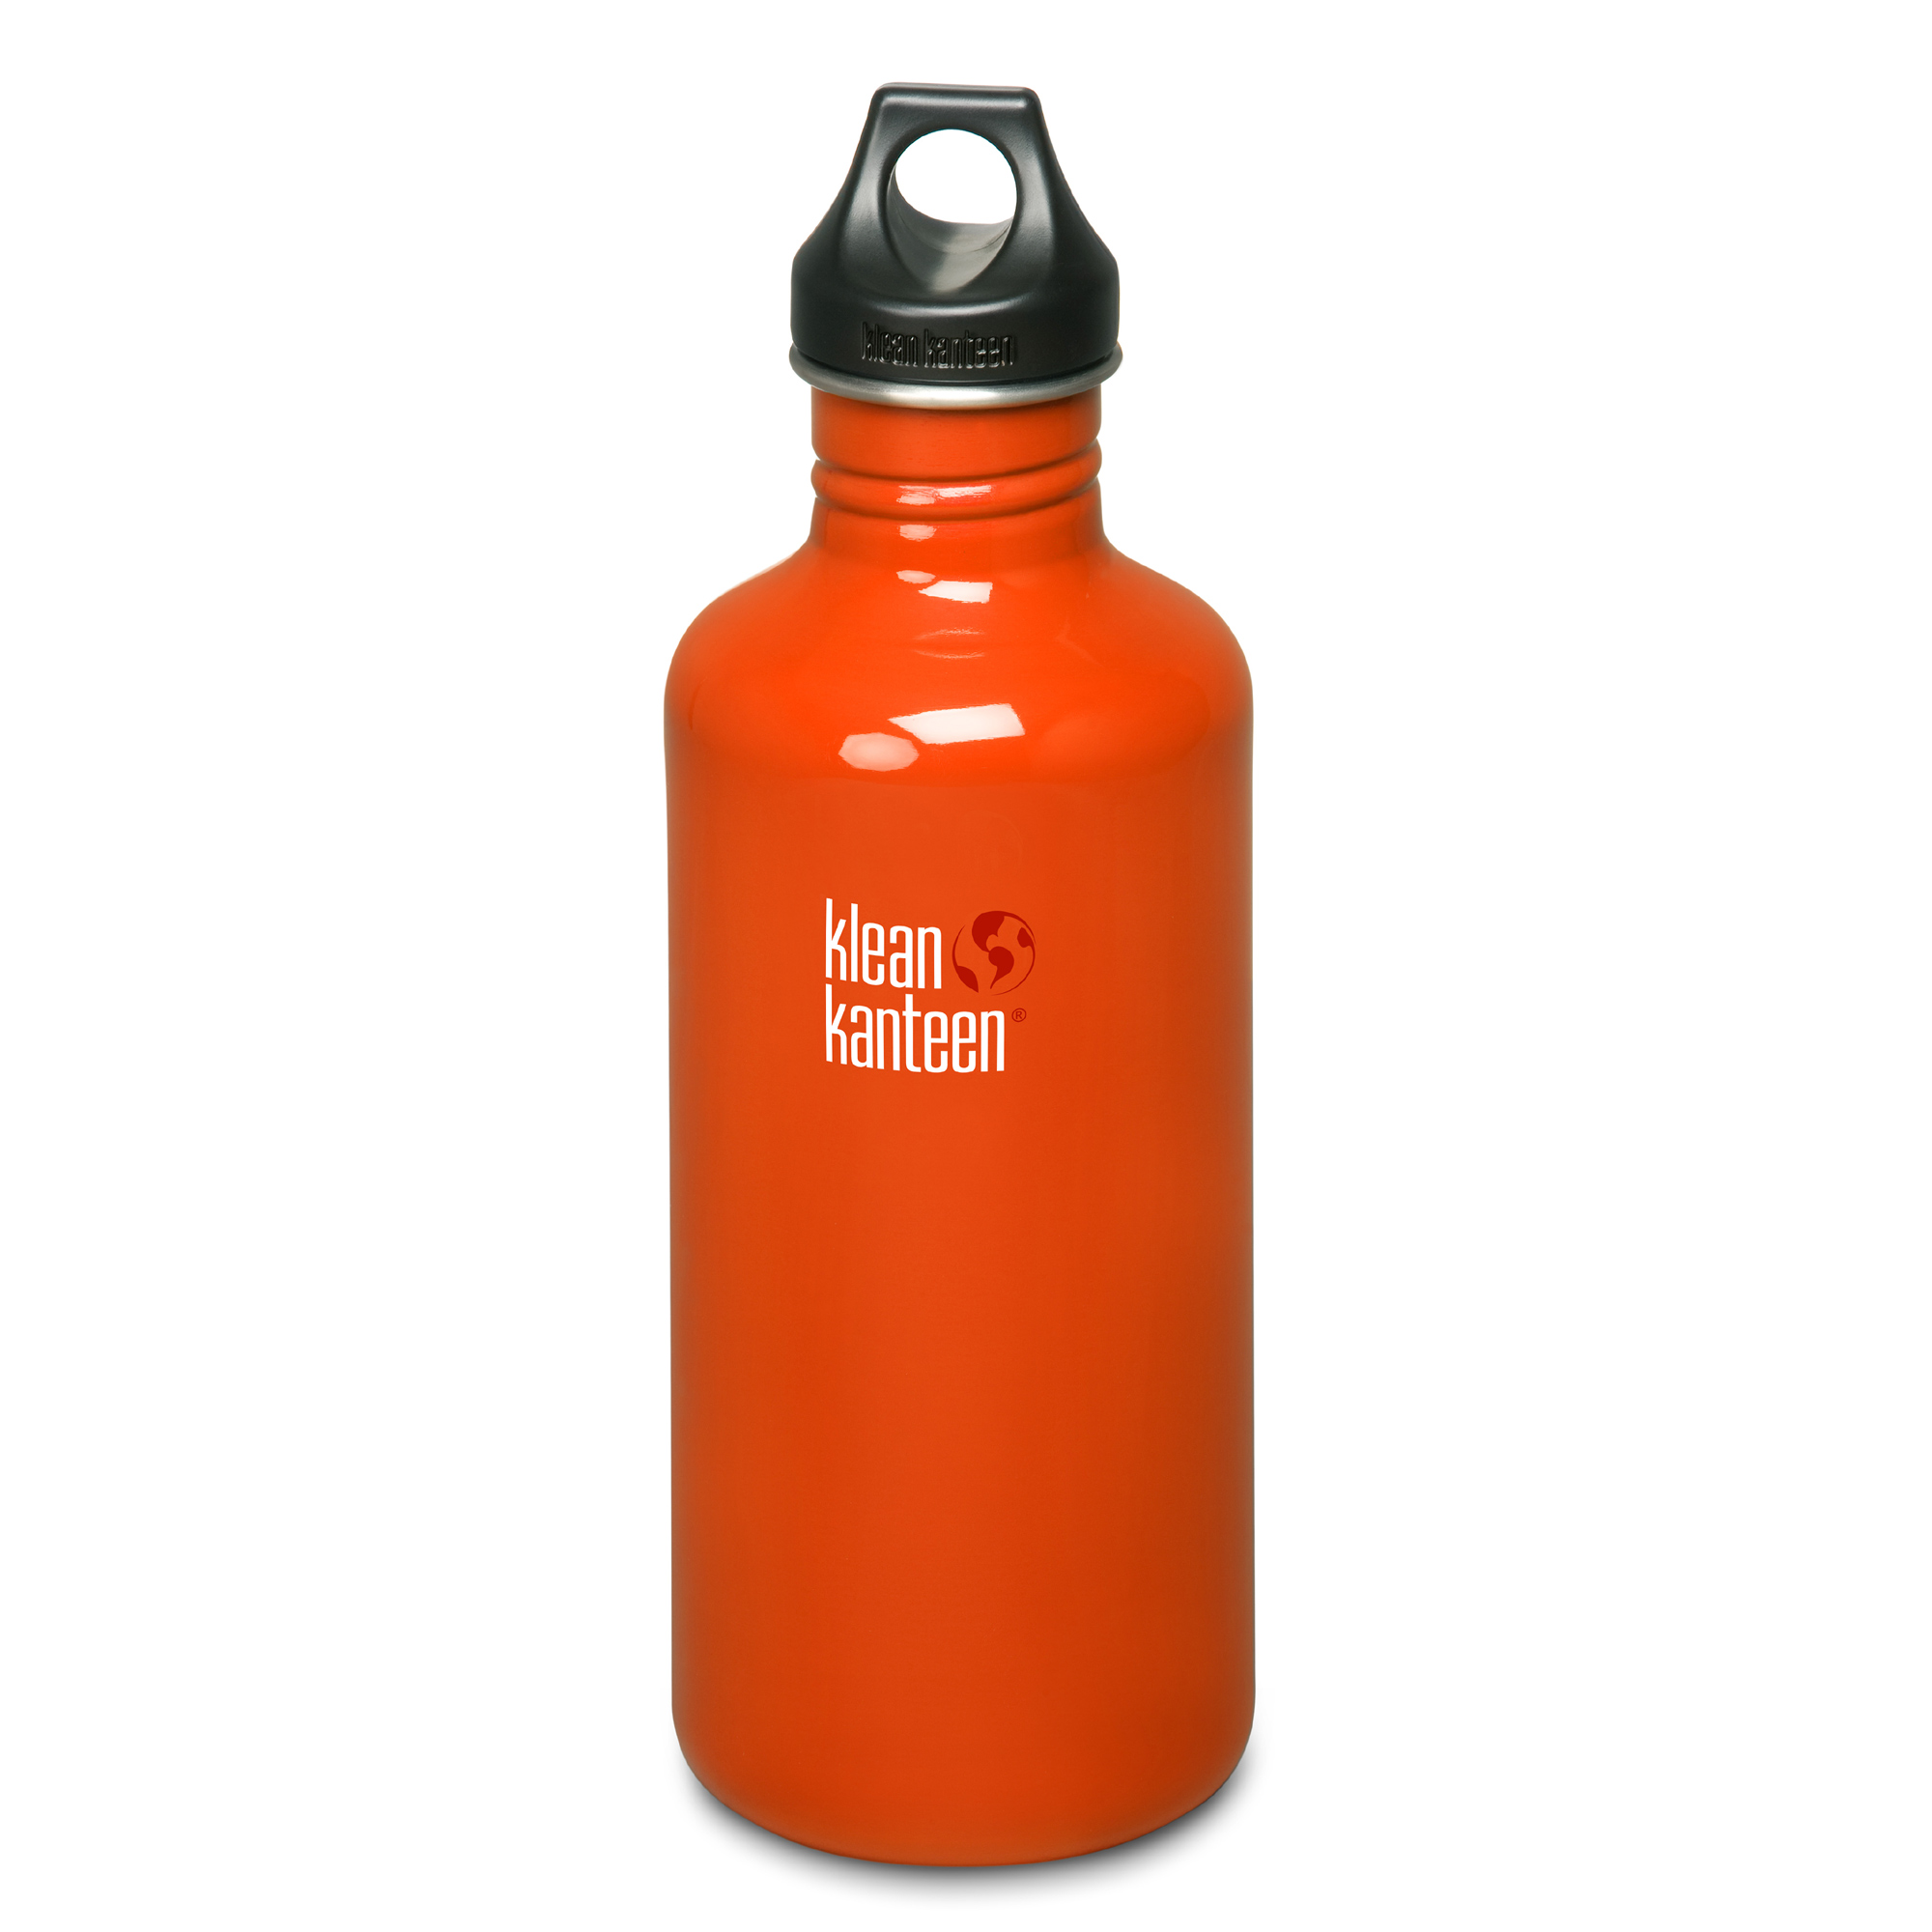 Klean Kanteen Classic 1.18L drinks bottle with Loop Cap - Flame Orange - official Klean Kanteen stockist